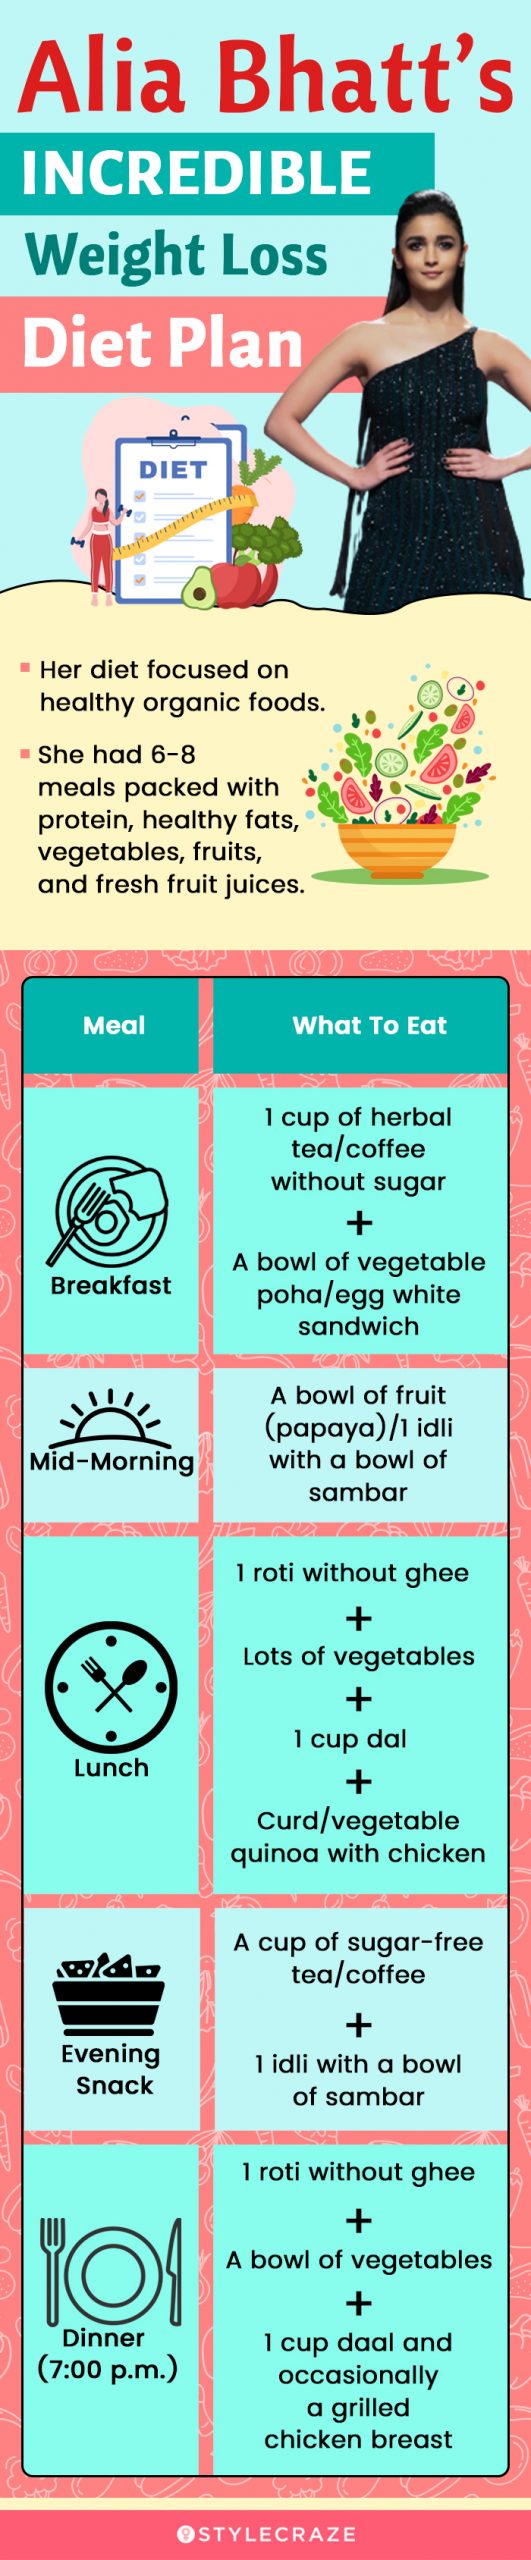 alia bhatt’s incredible weight loss diet plan (infographic)